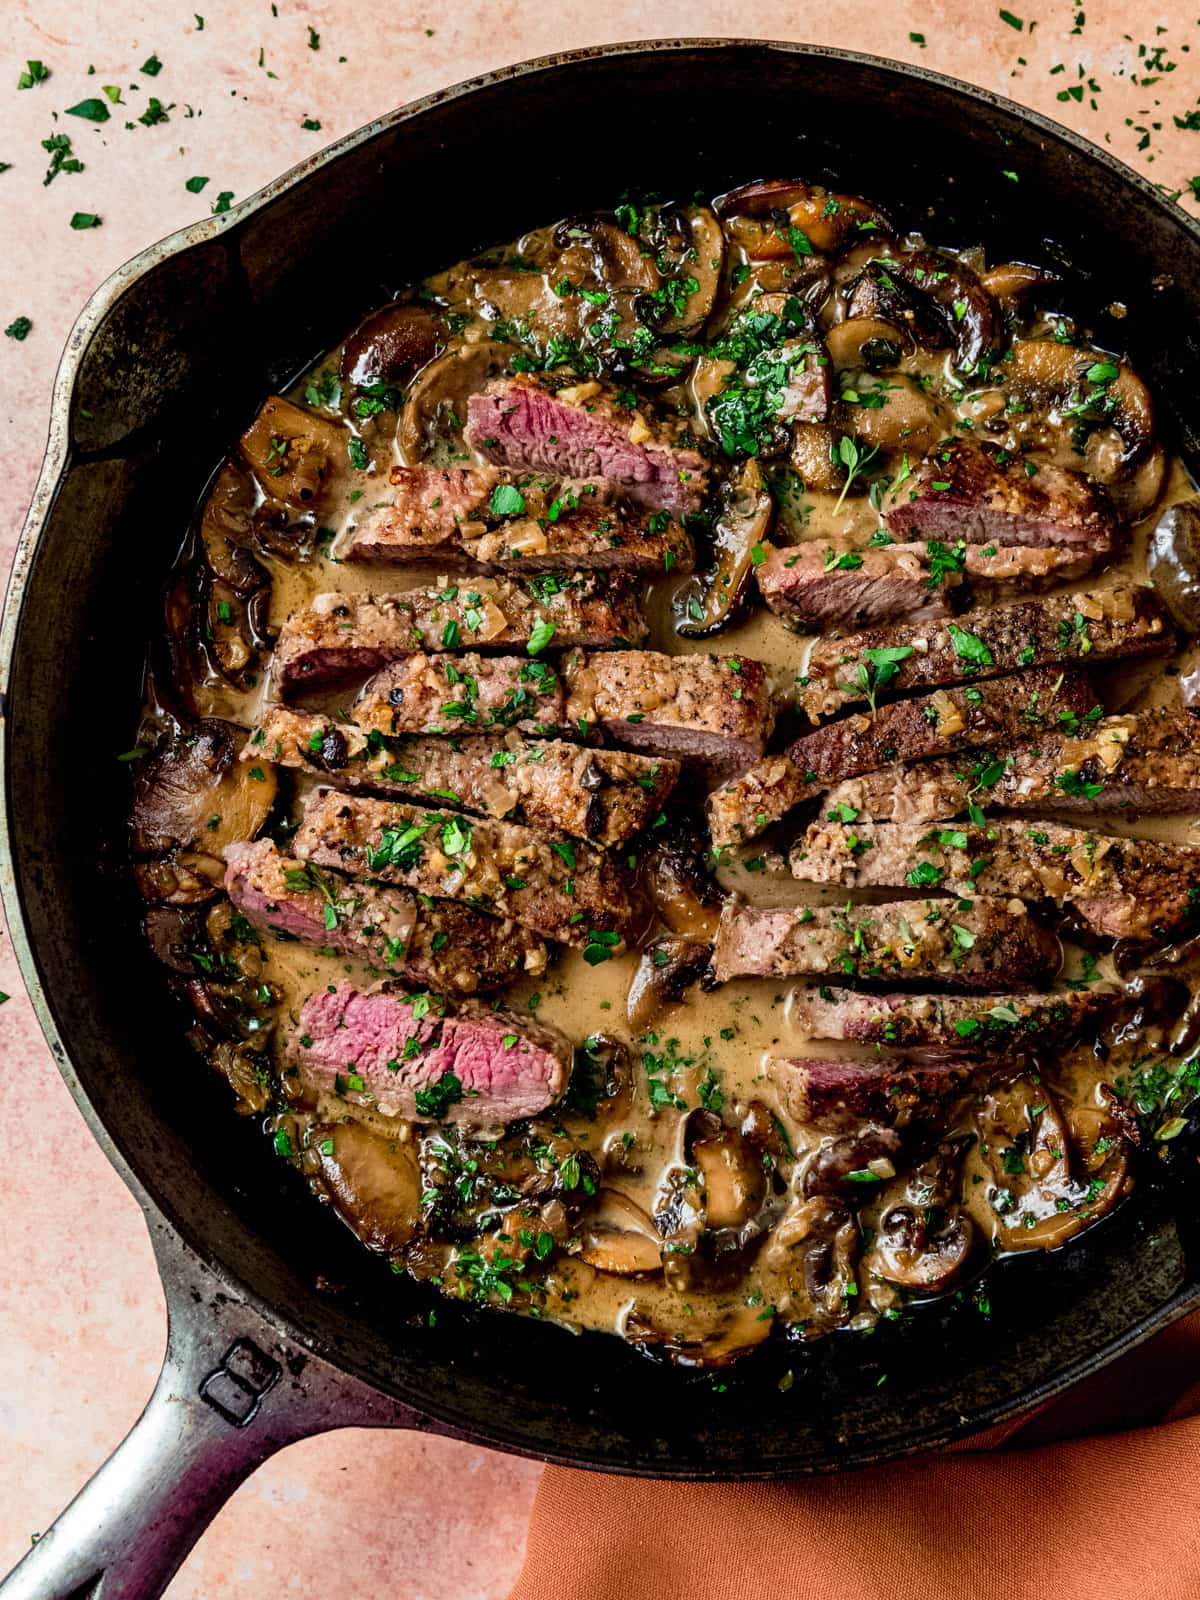 Steak marsala recipe with filet mignon in a creamy marsala sauce with mushrooms.